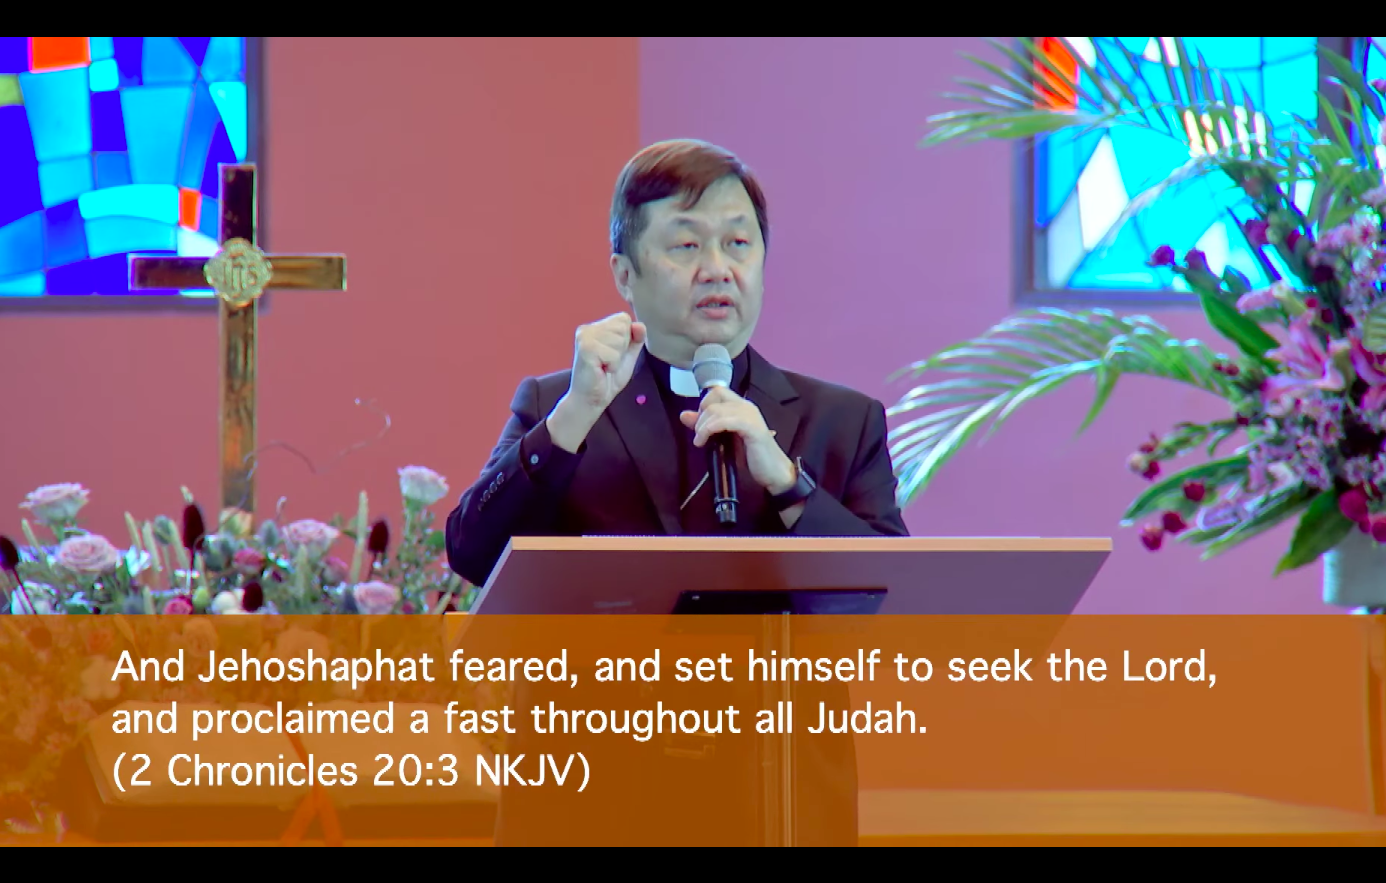 Photo of Rev Kow Shih Ming, at Paya Lebar Methodist Church's livestreamed service last week. Photo from PLMC's Facebook page.